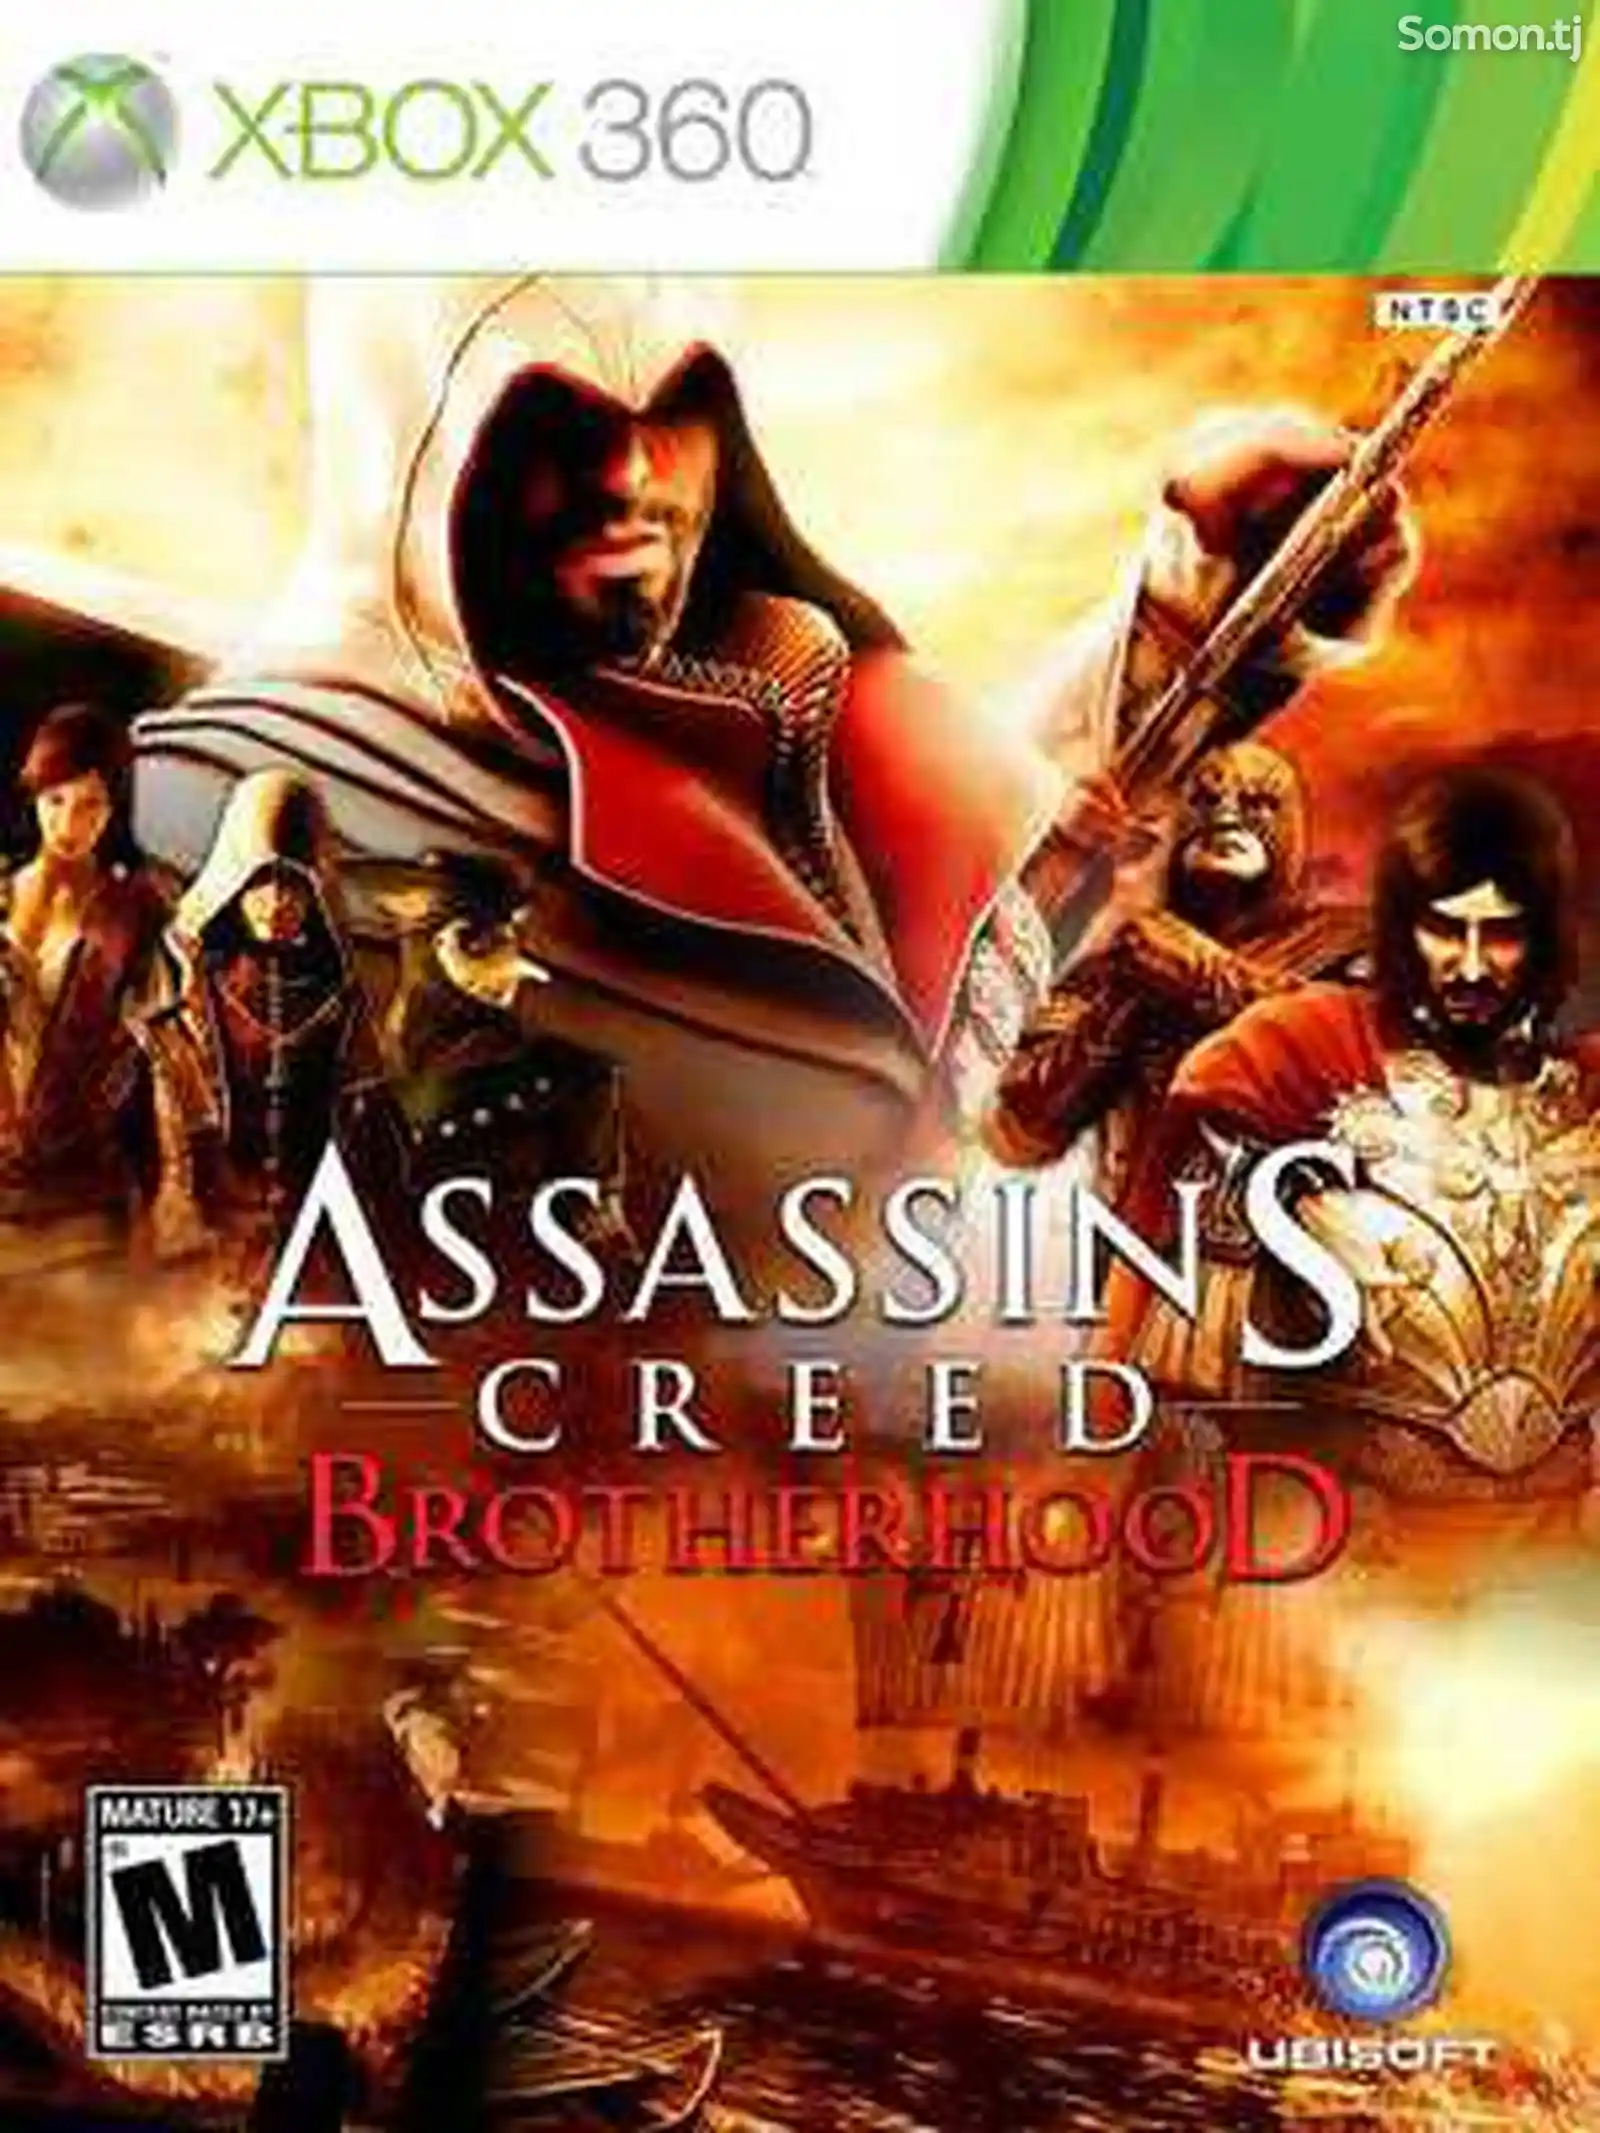 Игра Assassins creed Brotherhood для Xbox 360